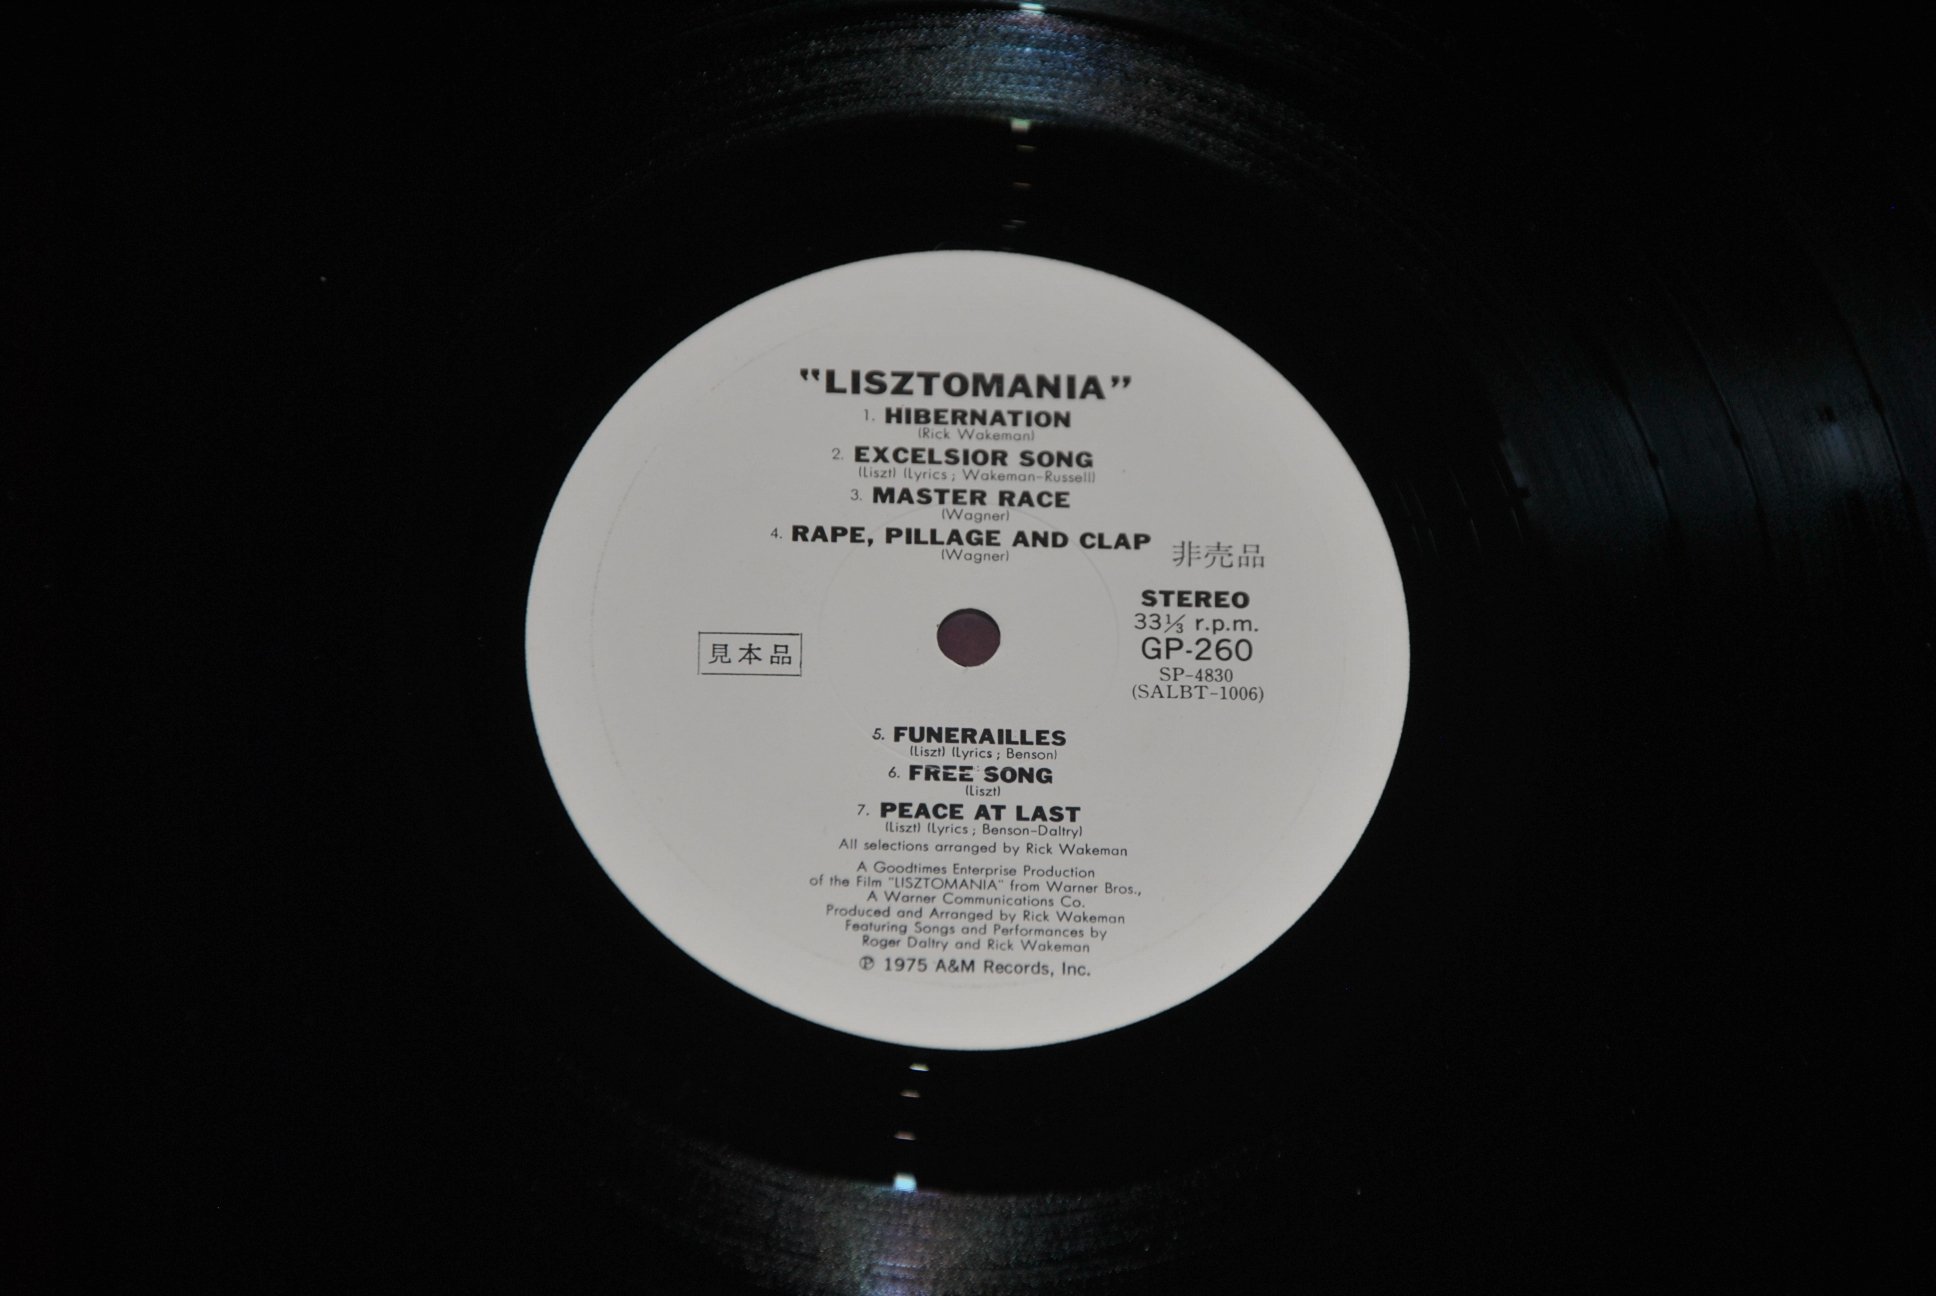 RICK WAKEMAN – LISZTOMANIA – A&M RECORDS GP 260 1975 – LP JAPAN OBI NM PROMO

LP…